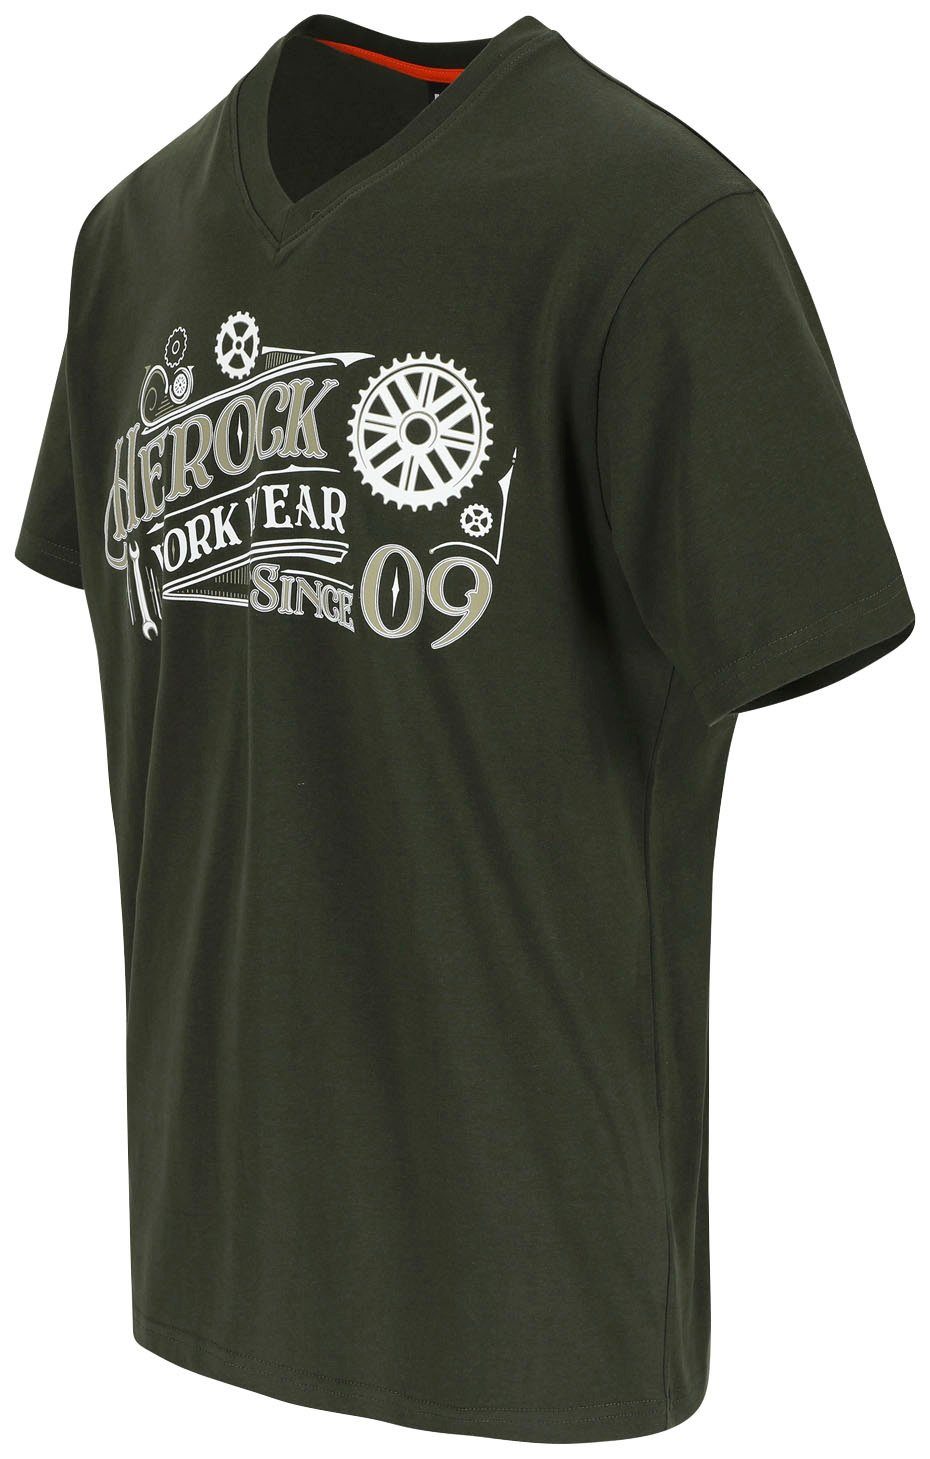 Herock Limited Edition Barber T-Shirt